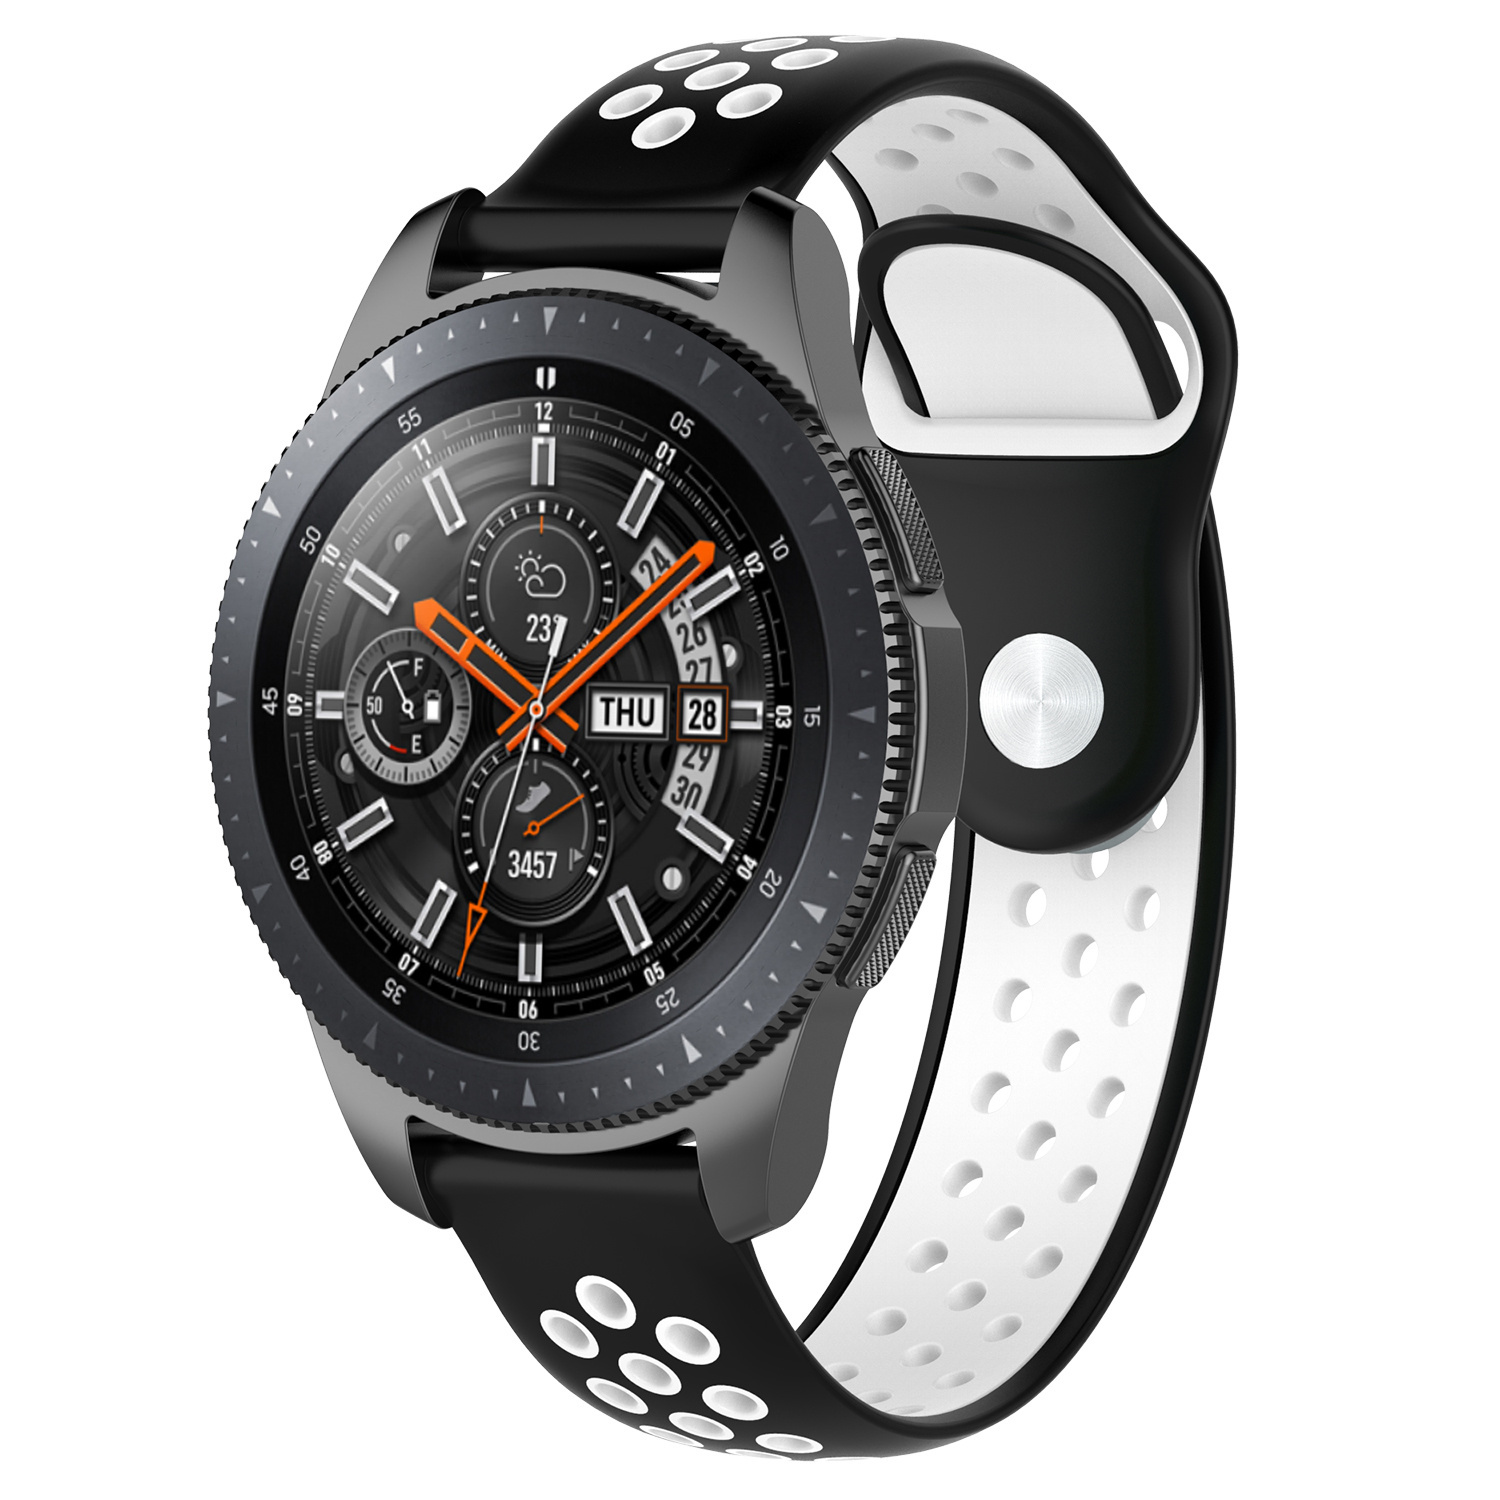 Huawei Watch GT dupla sport szalag - fekete fehér